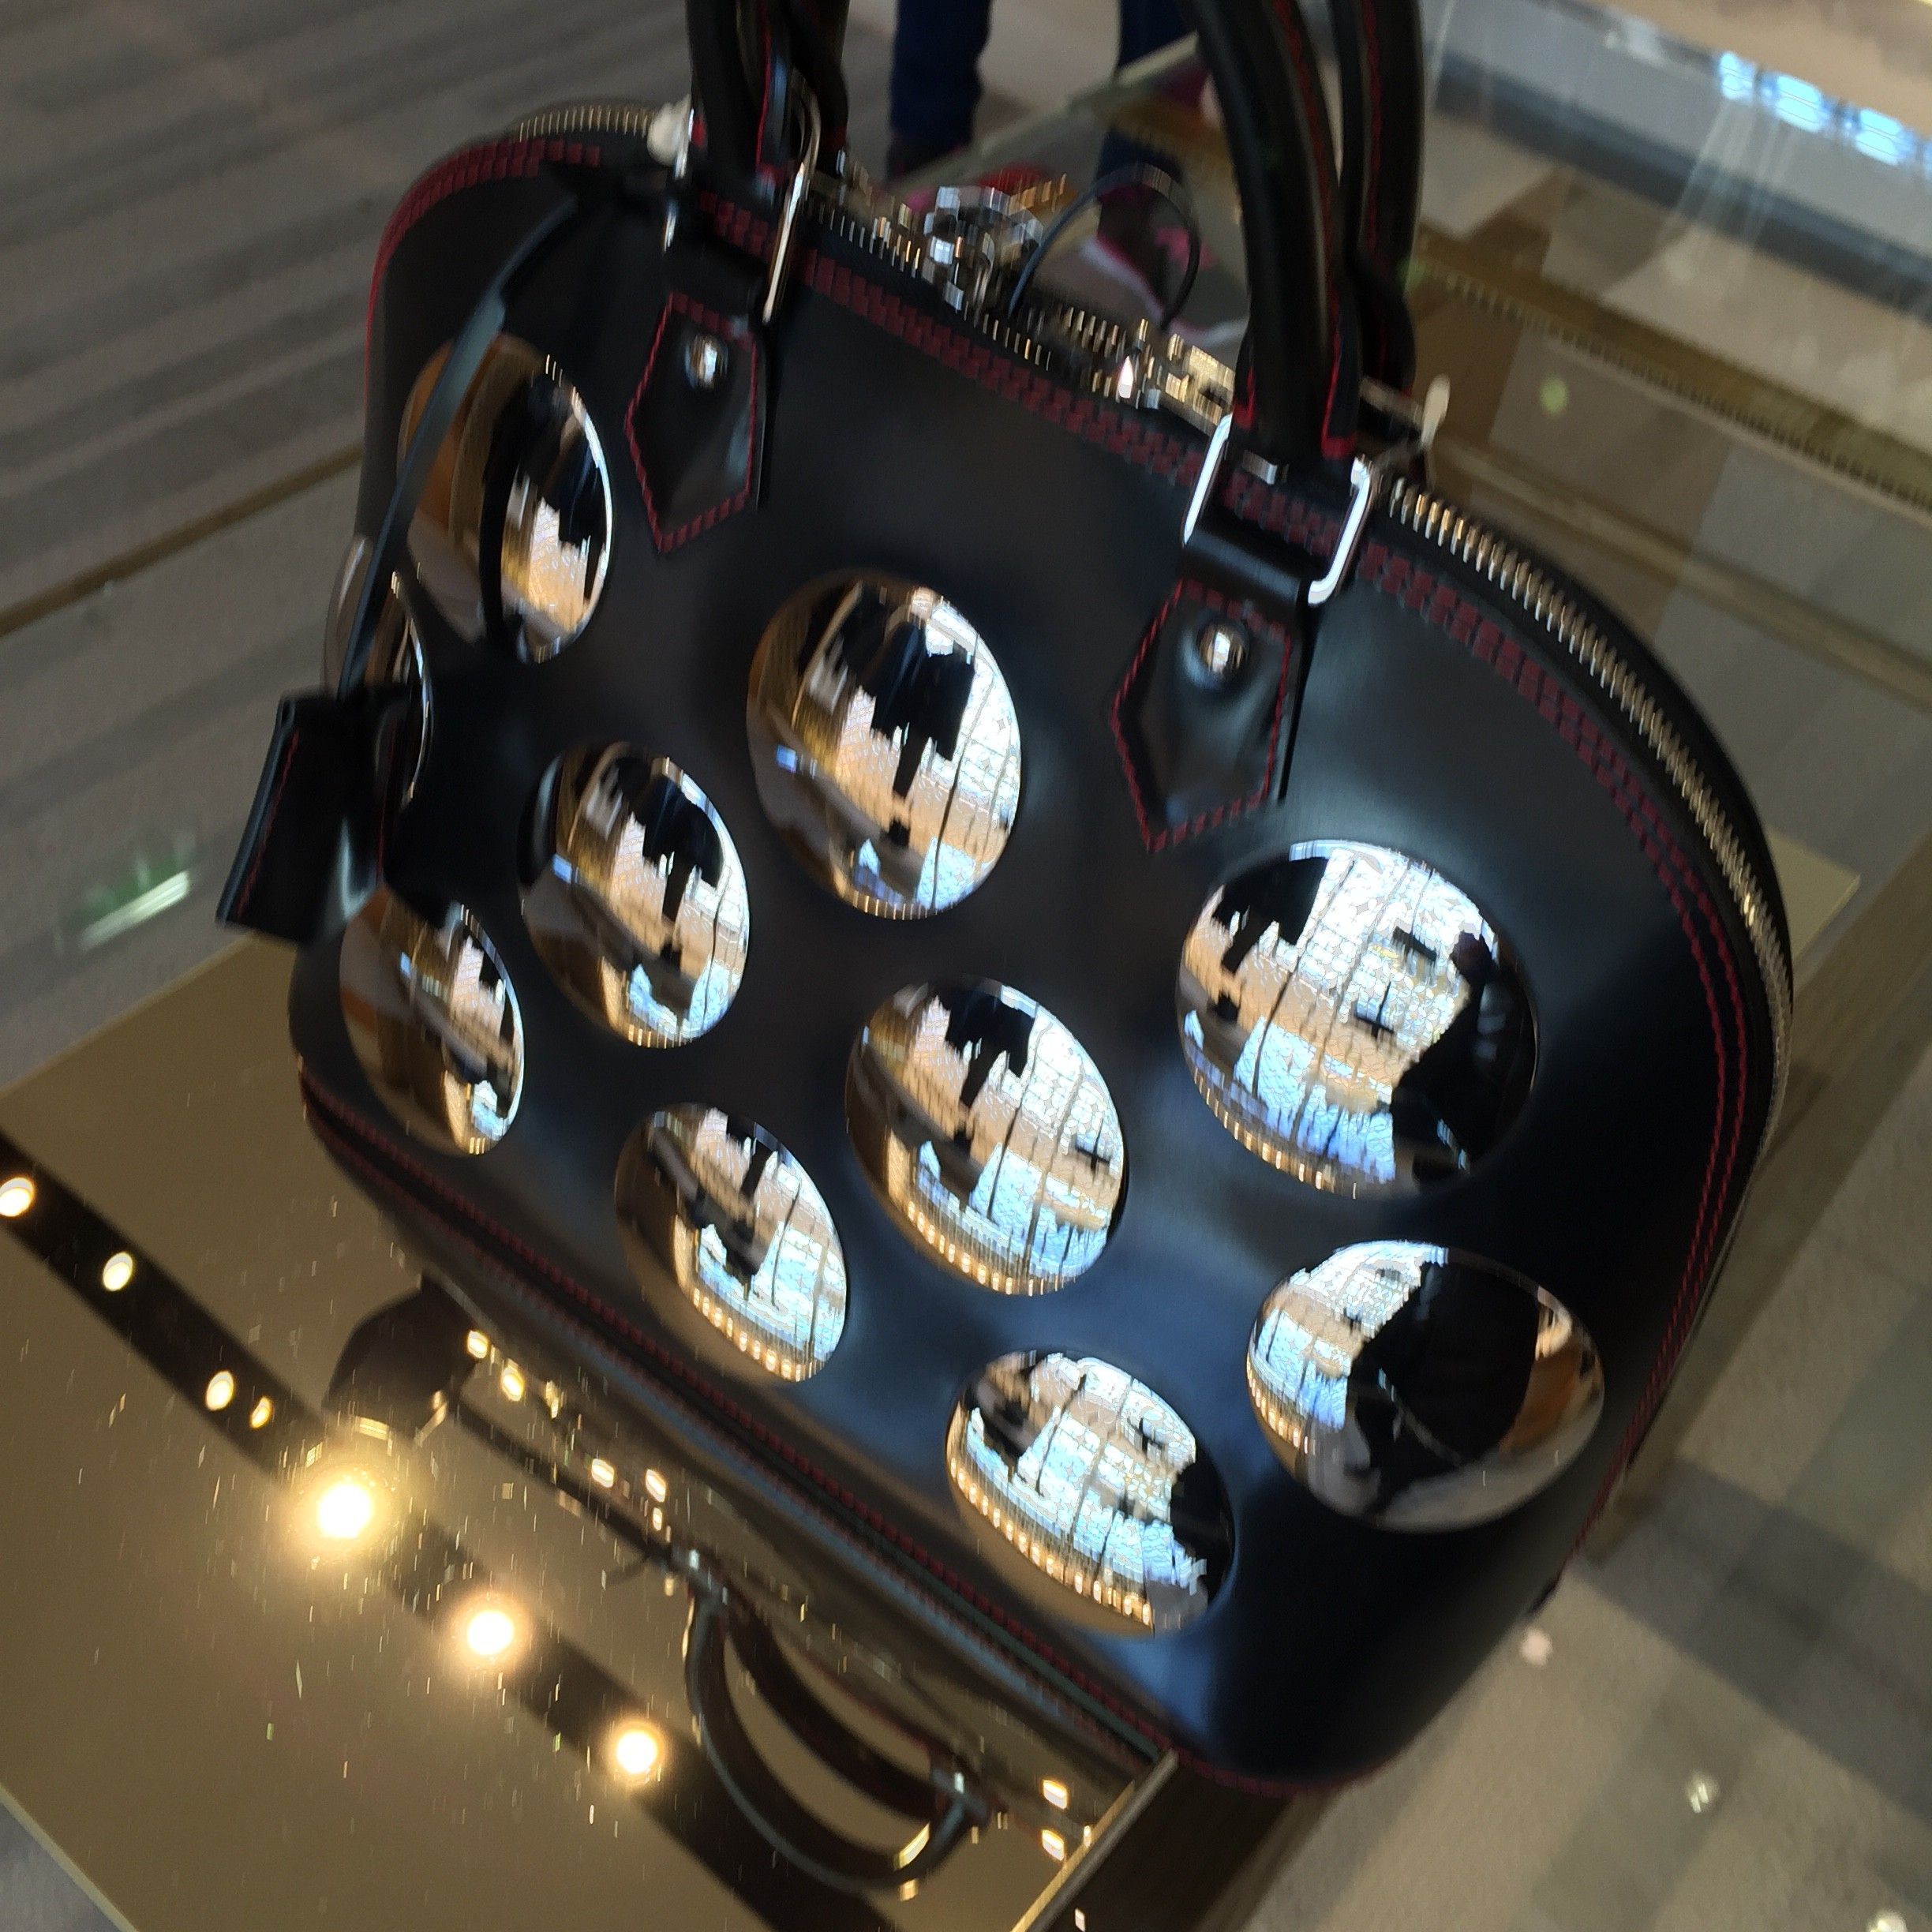 At Louis Vuitton's Spring 2016 Men's Show, the Bucket Bags Weren't